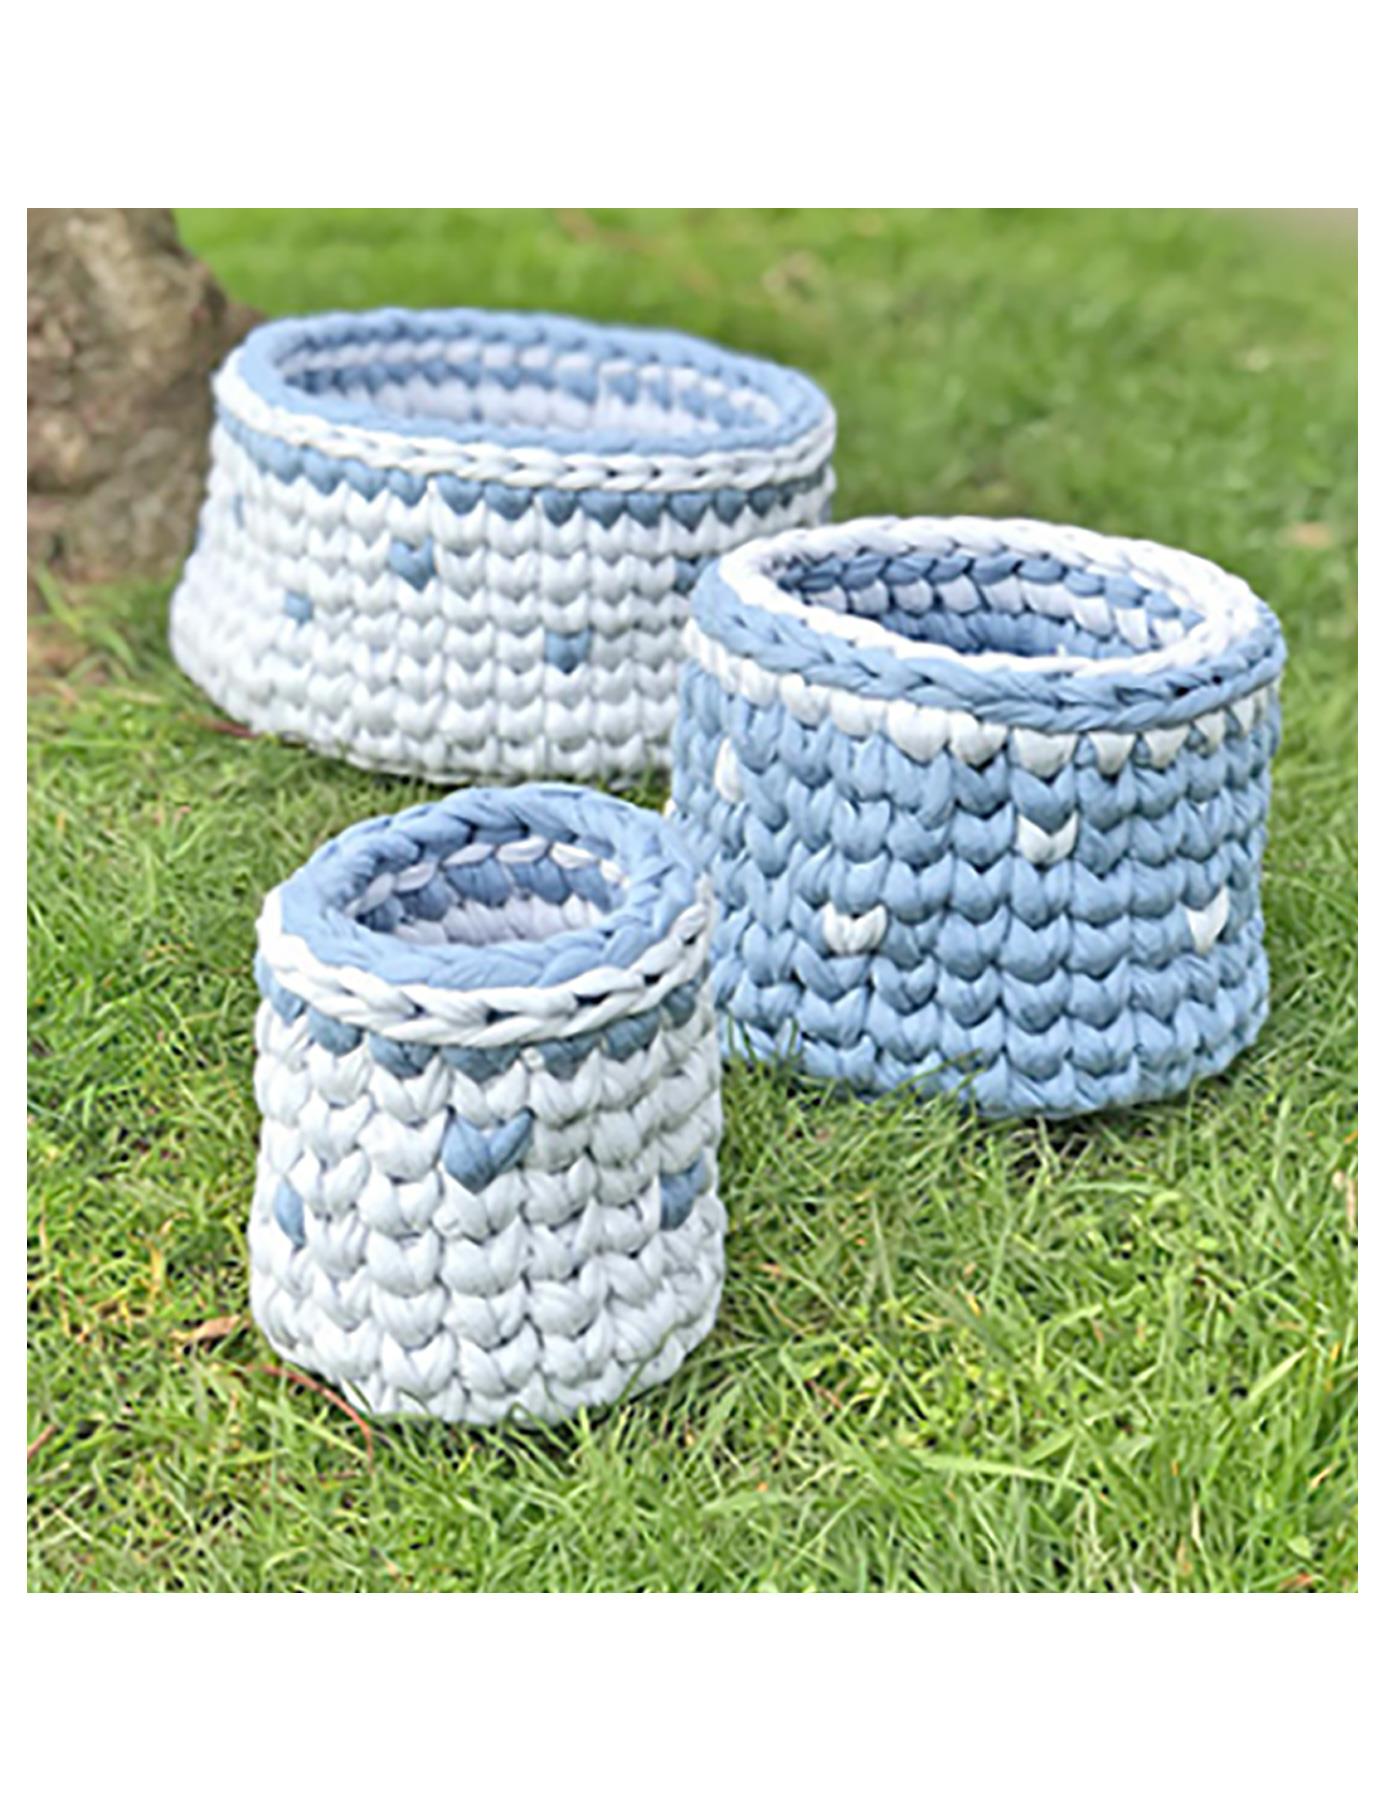 3 Nesting Bowls - Crochet Pattern